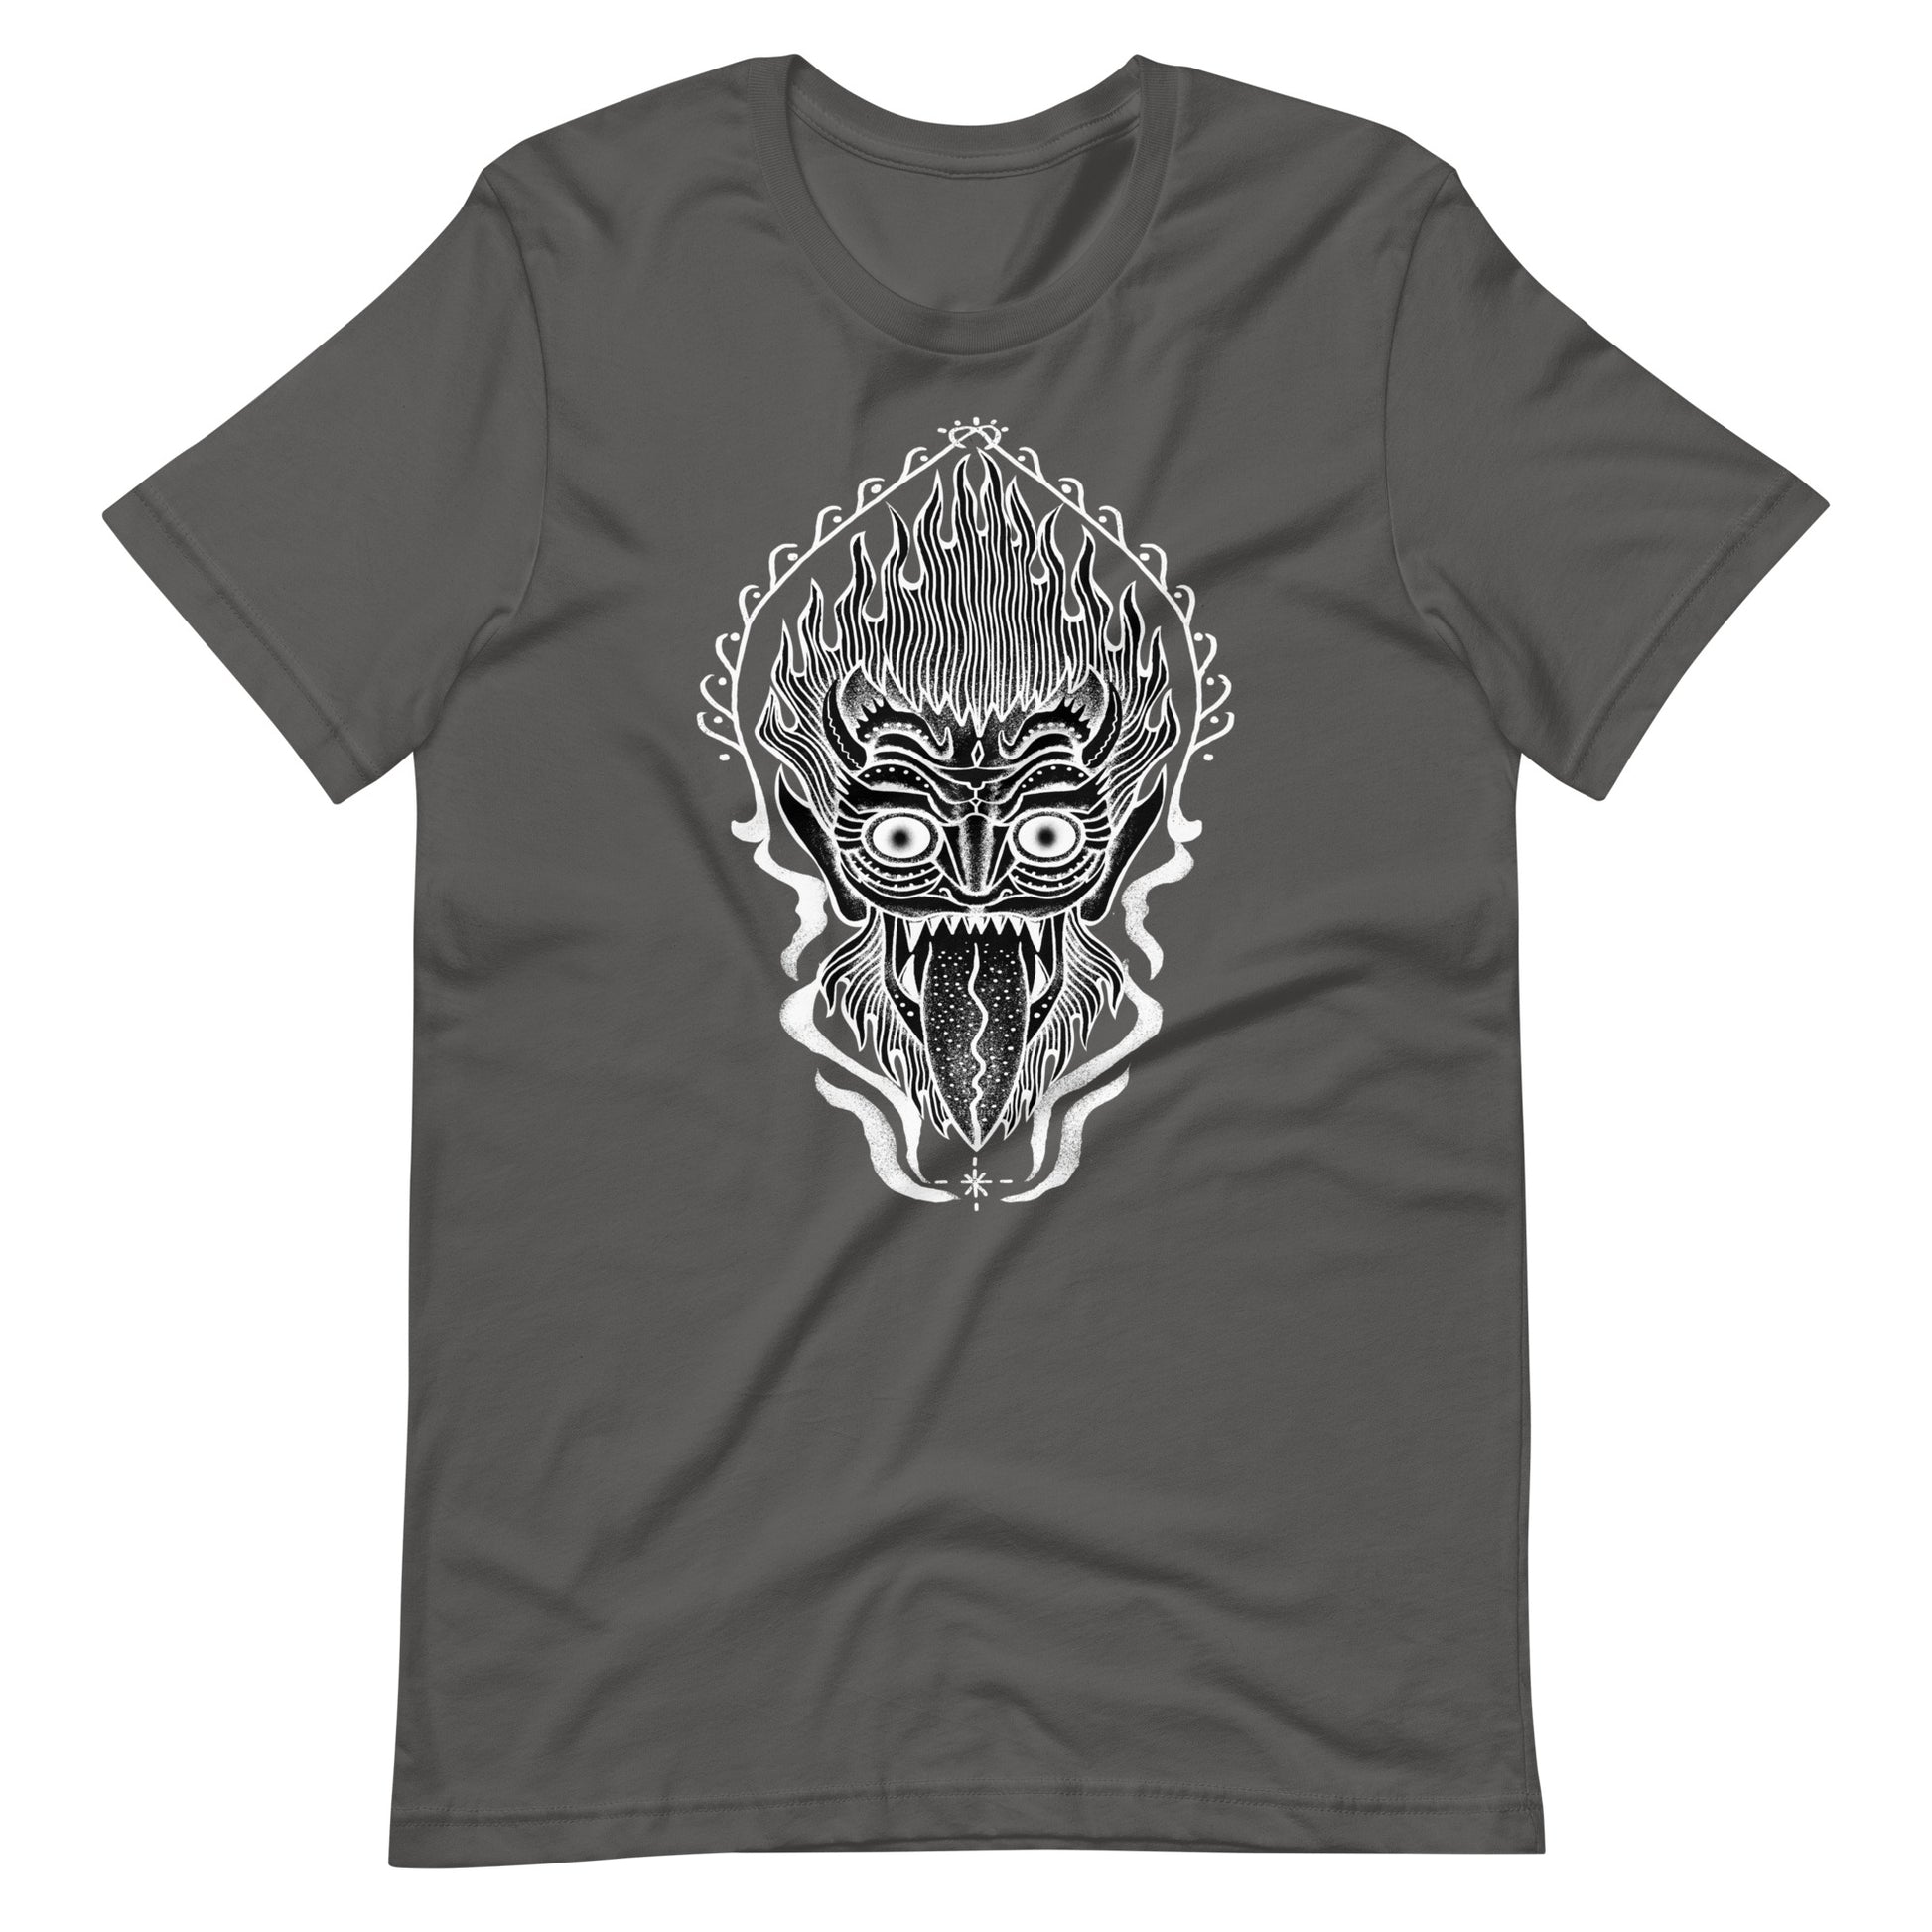 King of Fire - Men's t-shirt - Asphalt Front